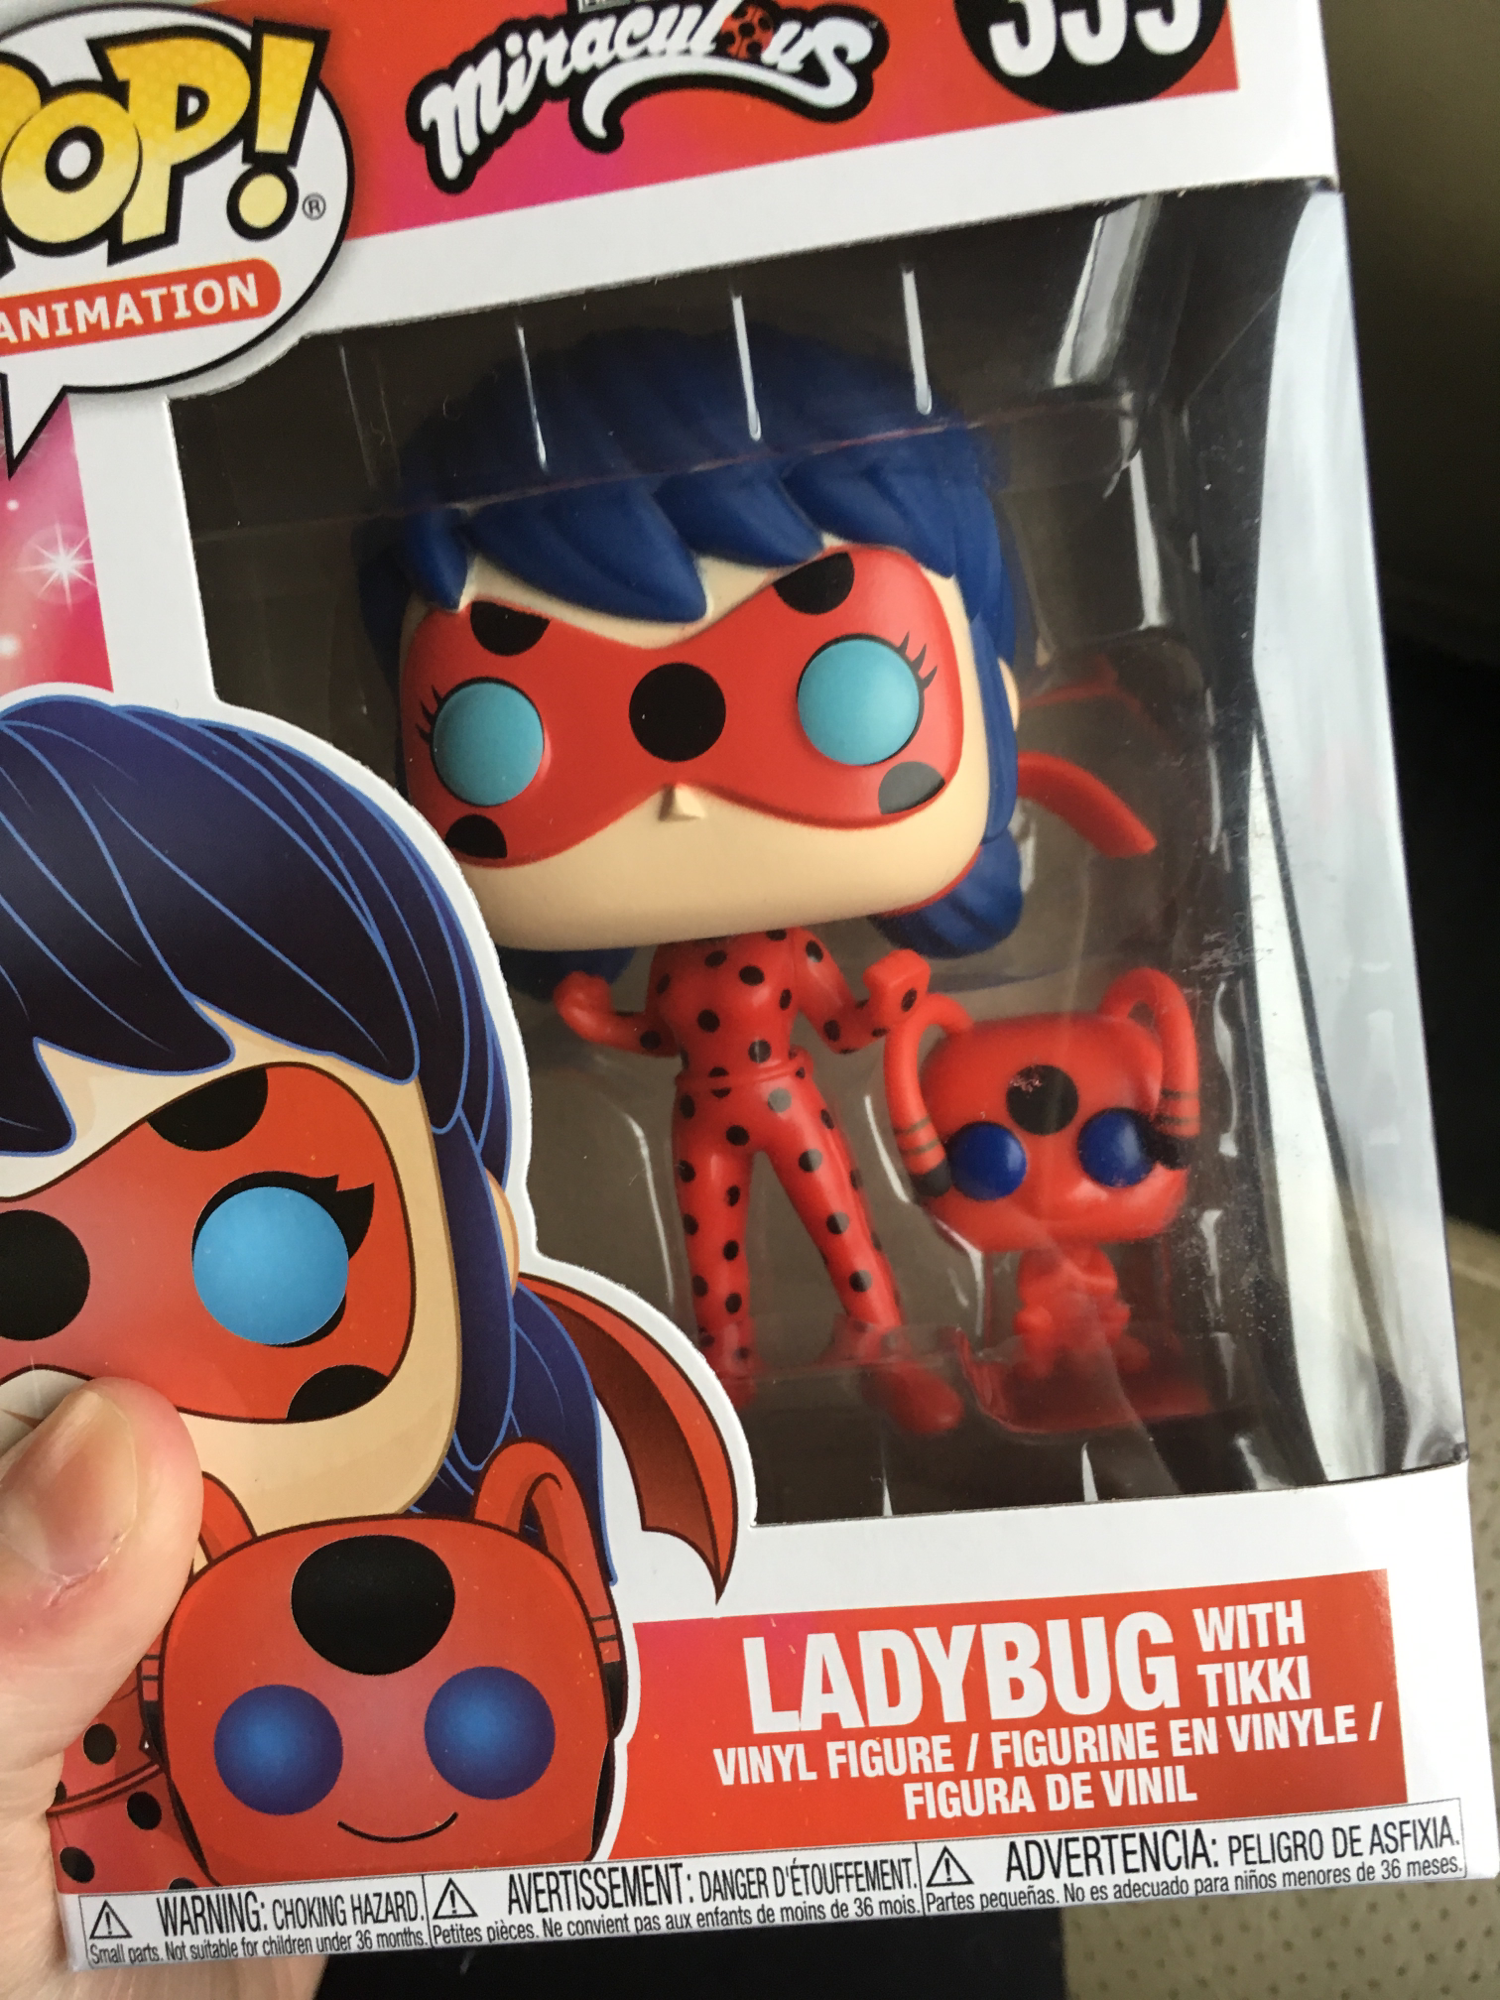 ladybug pop funko